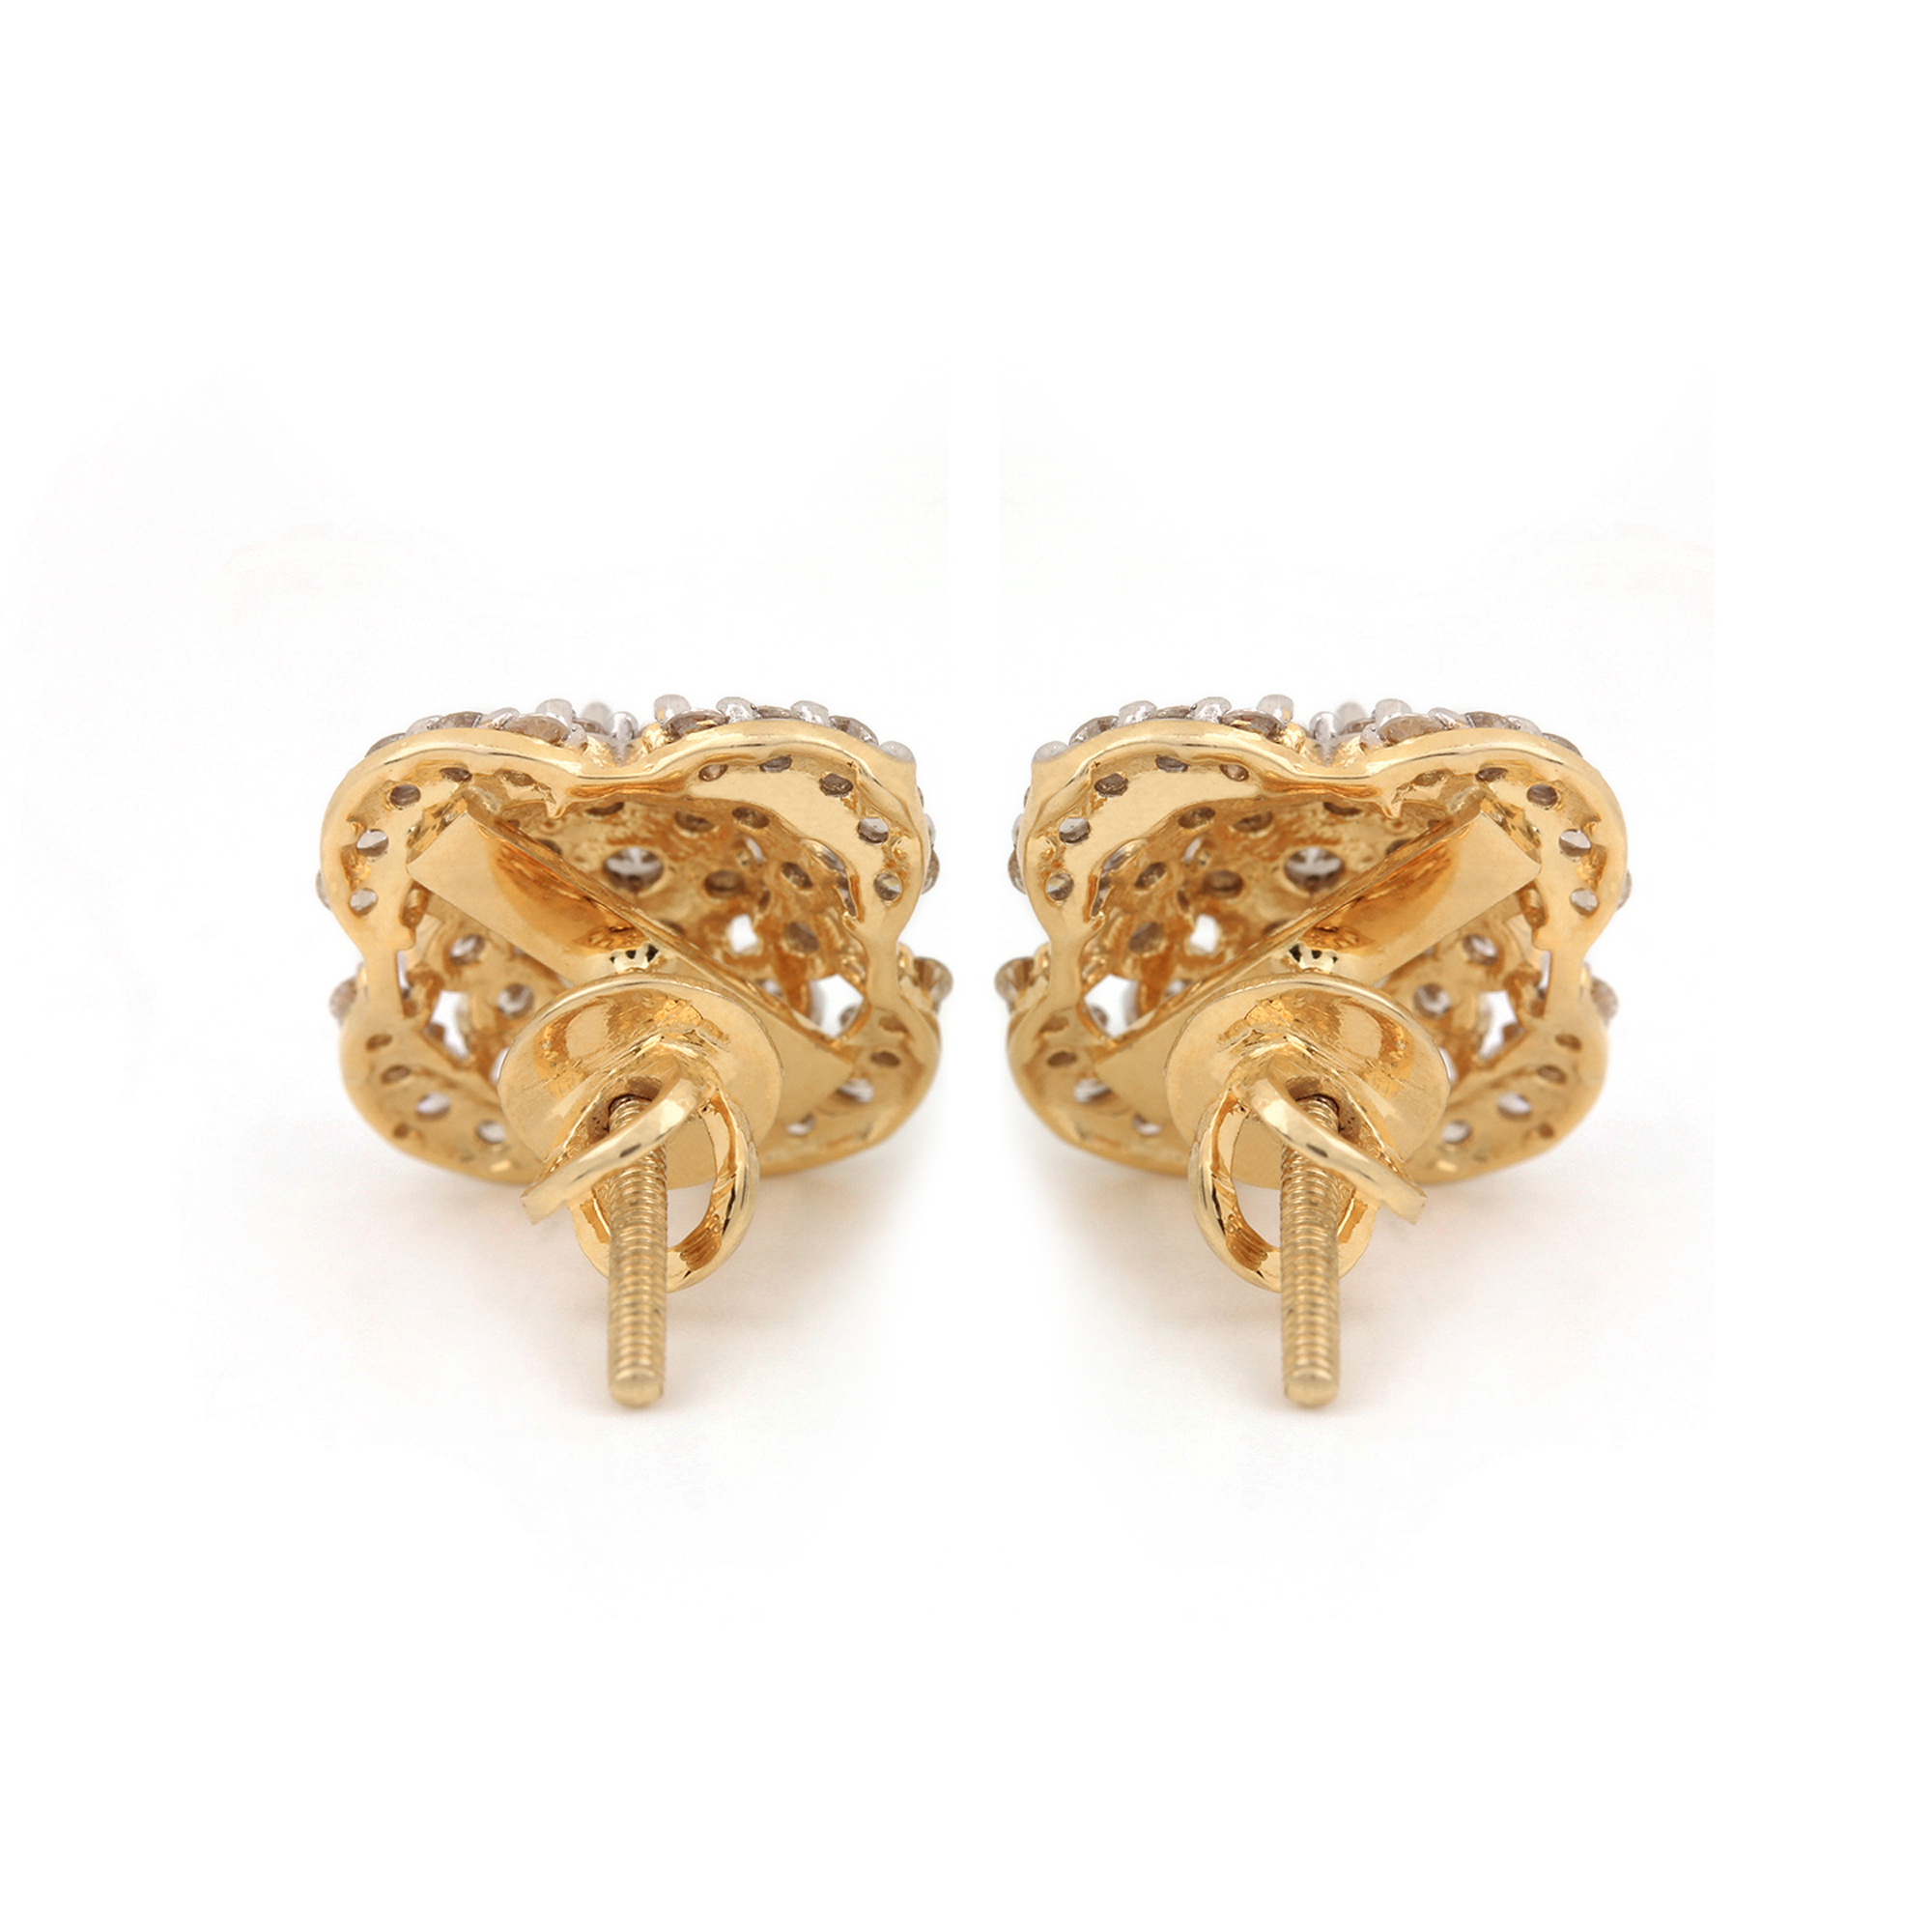 Gold & Diamond Earrings Handmade Jewelry